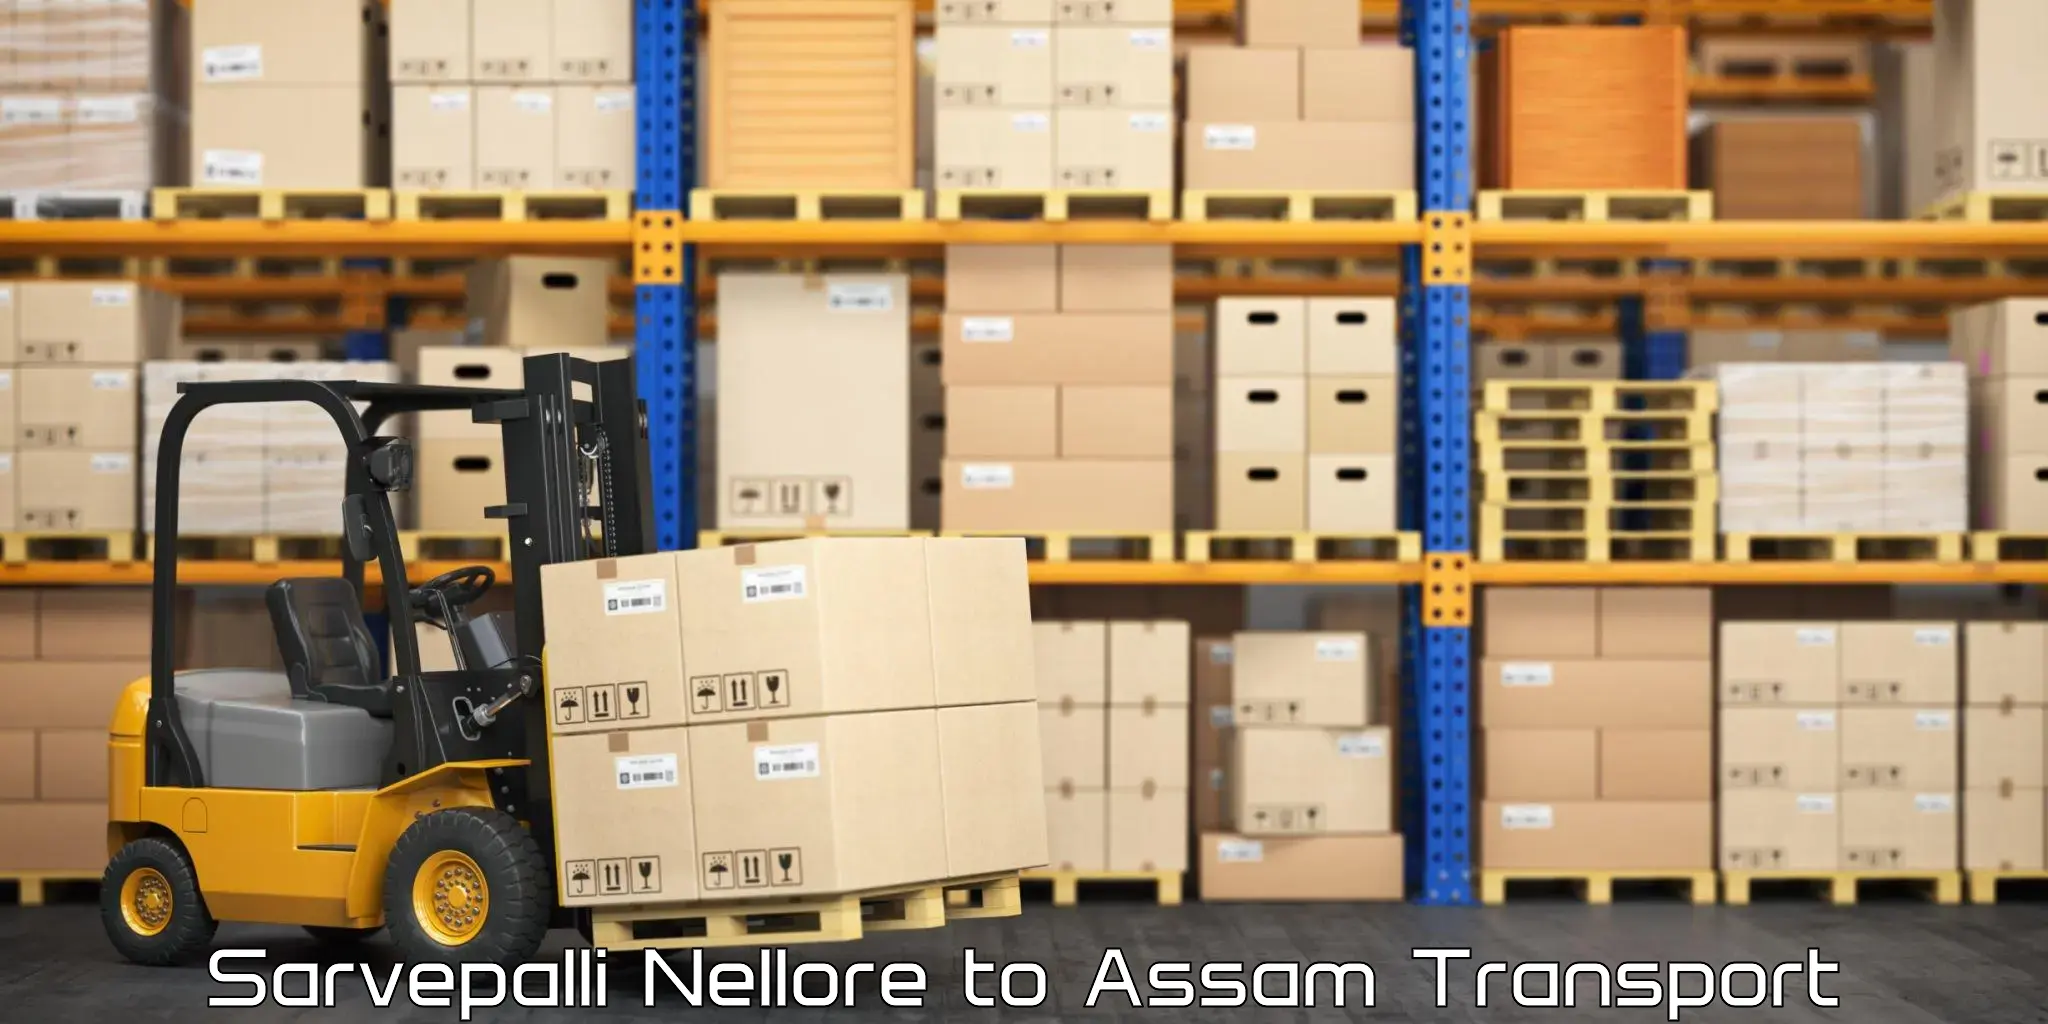 Goods delivery service Sarvepalli Nellore to Lala Assam